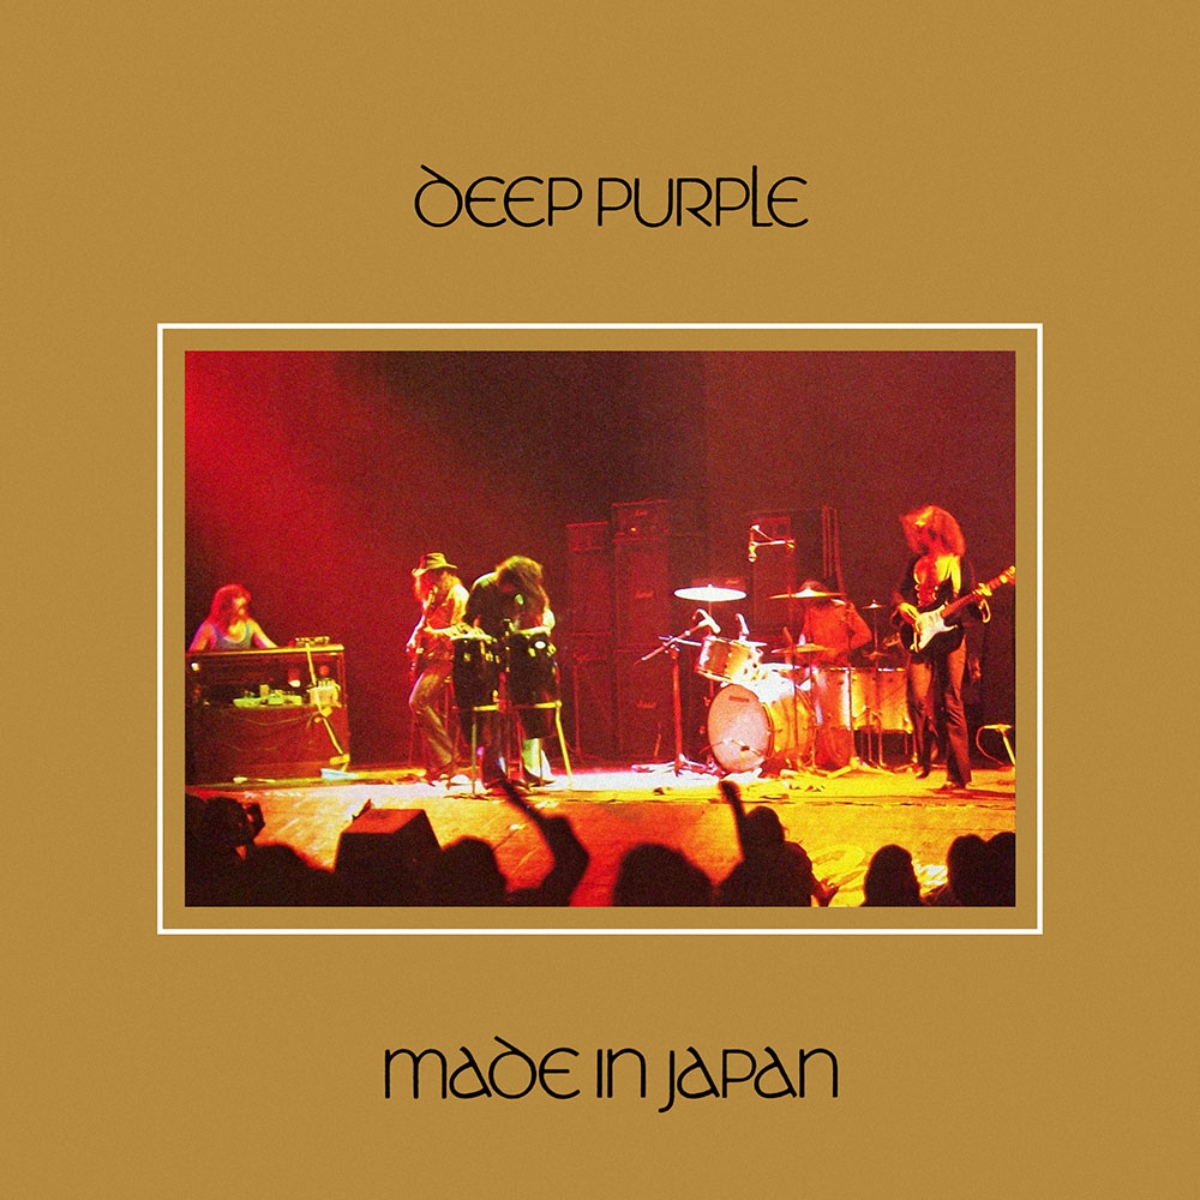 Deep Purple - "Made in Japan" (capa do álbum)